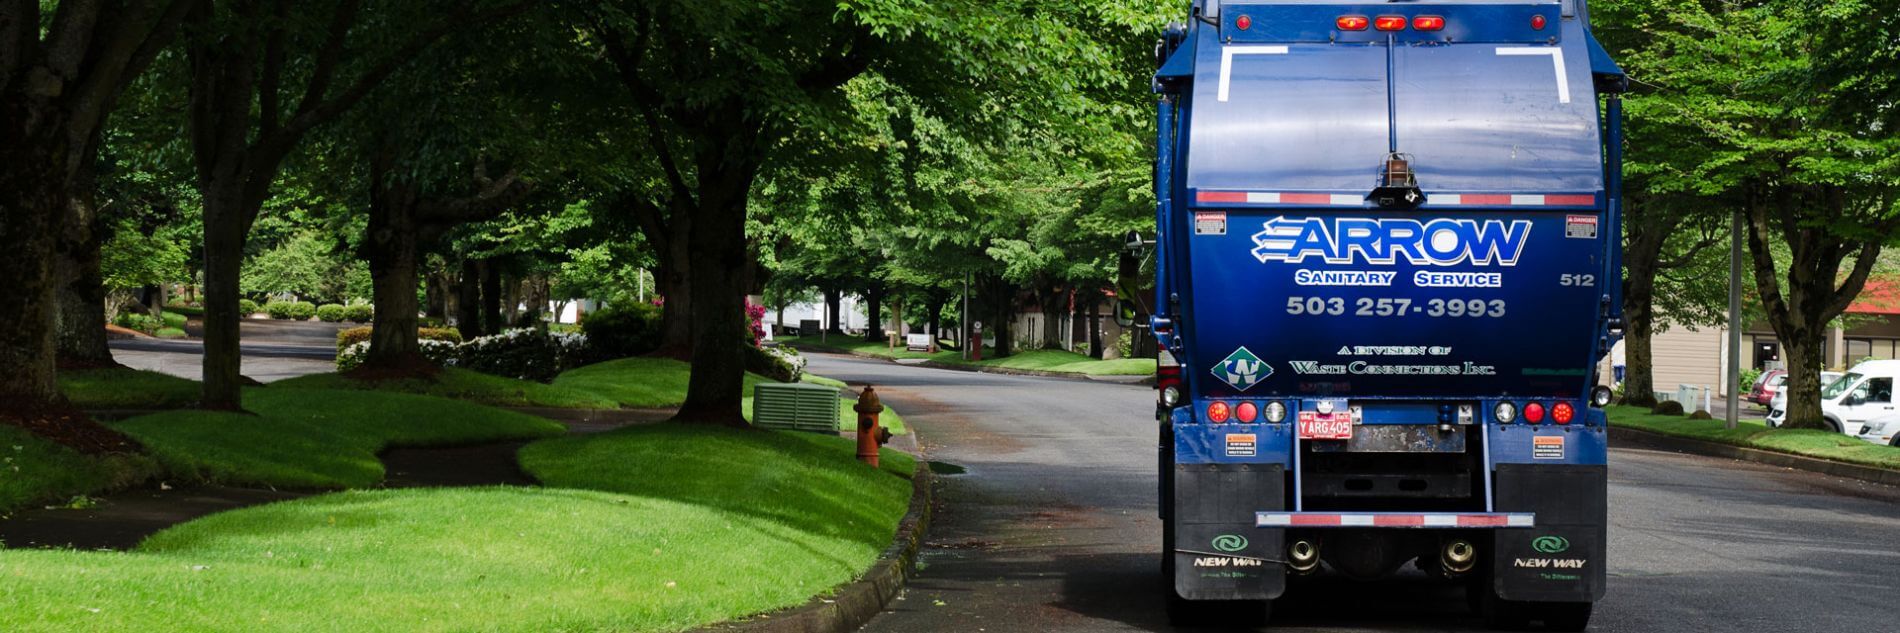 Photo of Arrow Sanitary Service truck driving through residential neighborhood.